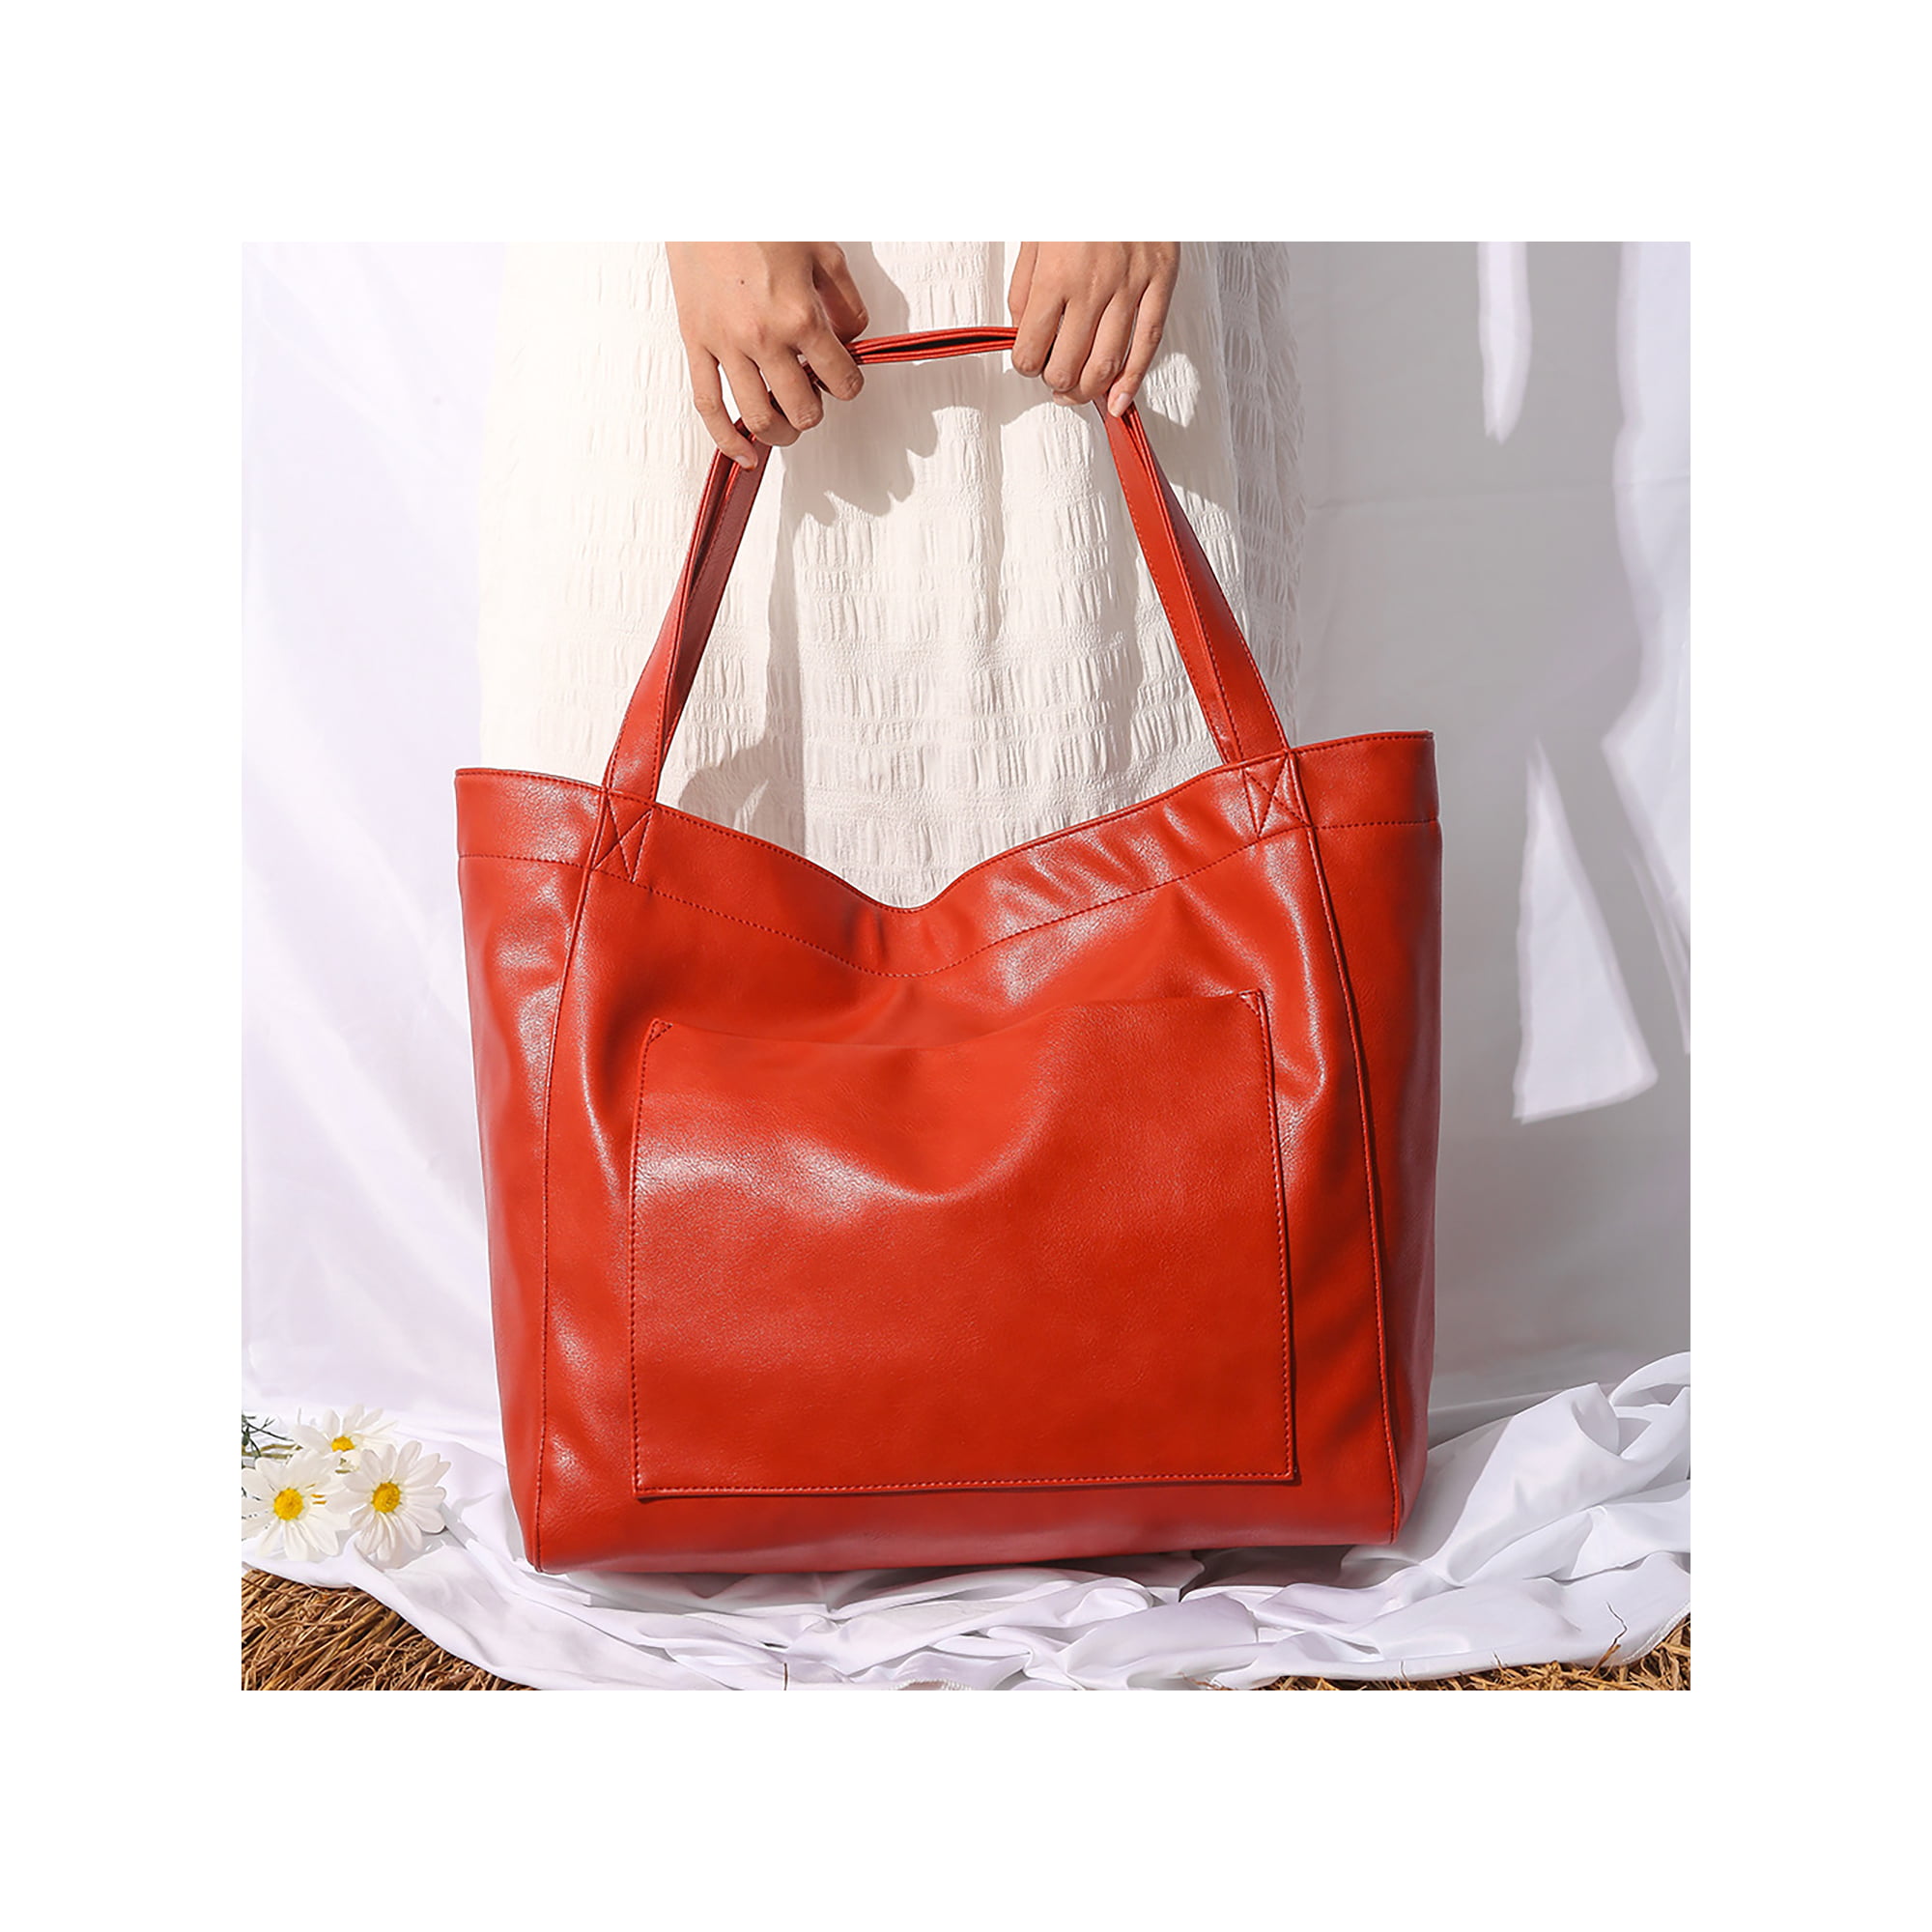 PU Red Traveling Handbag